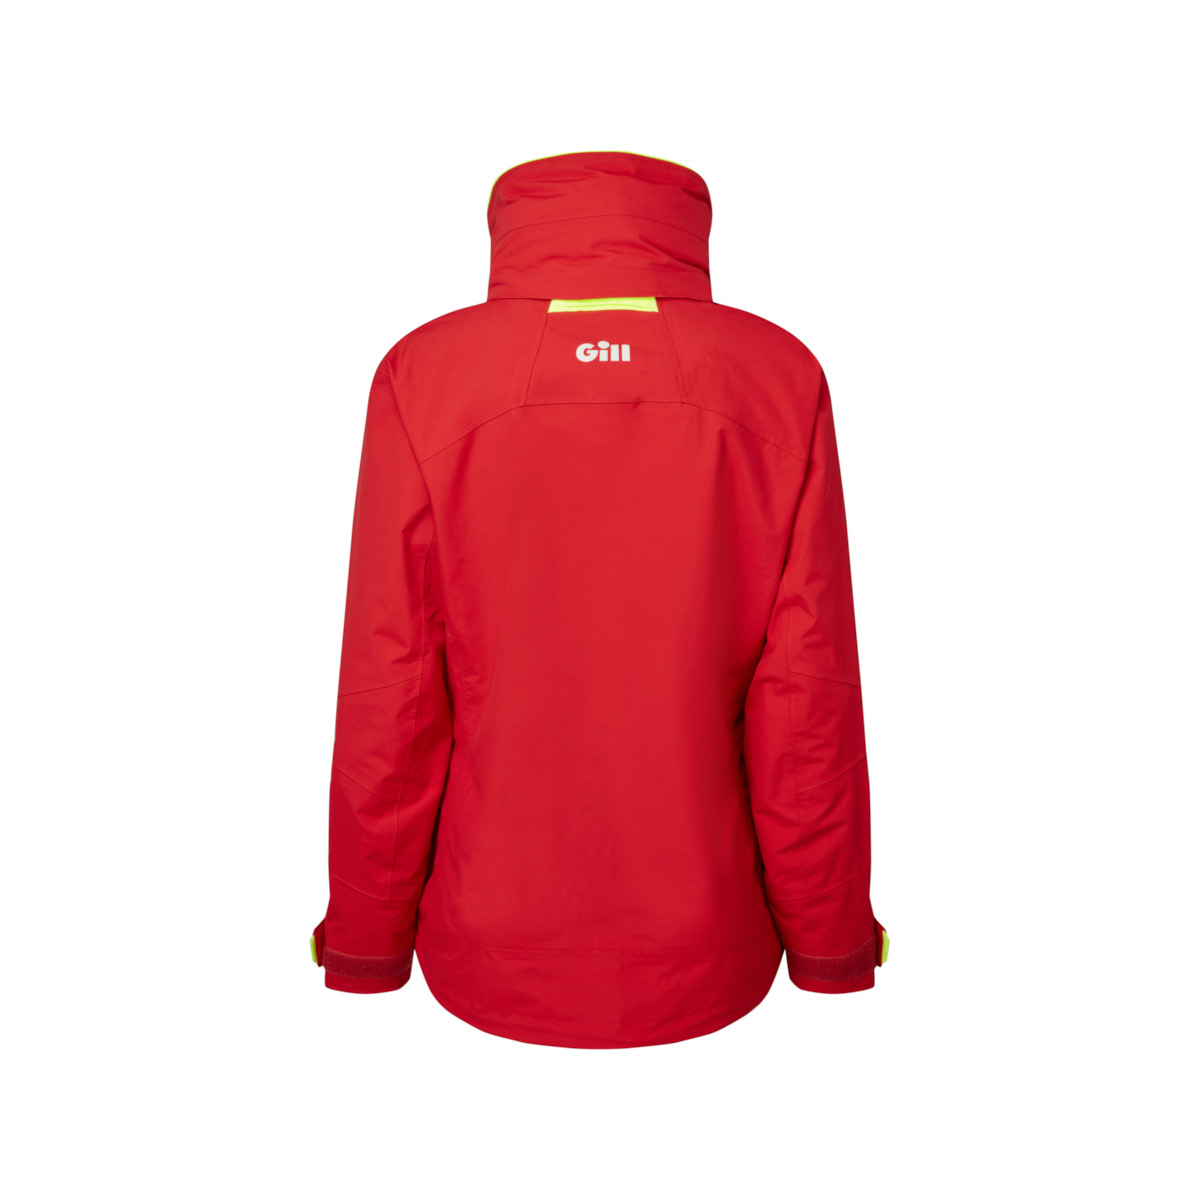 Gill OS32 veste de voile Coastal femme rouge, taille 12